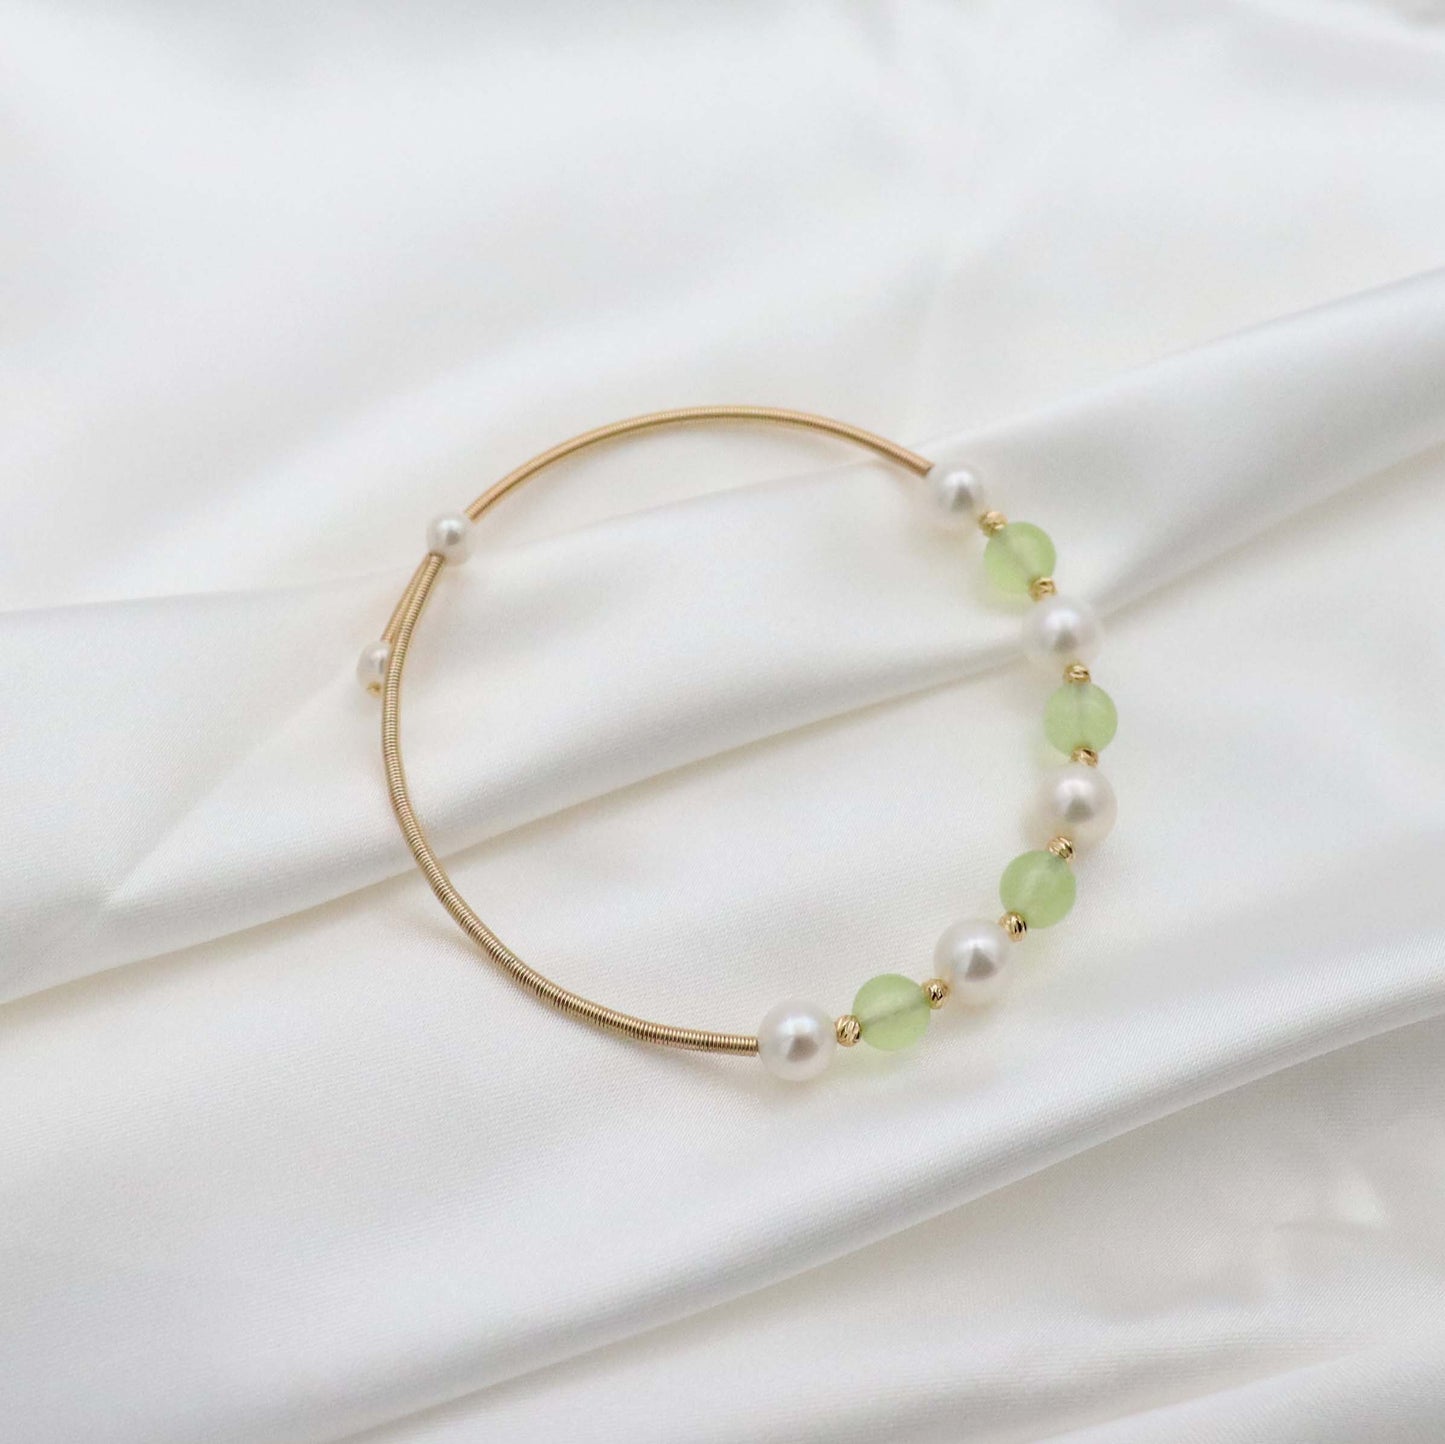 Adjustable pearl bracelet